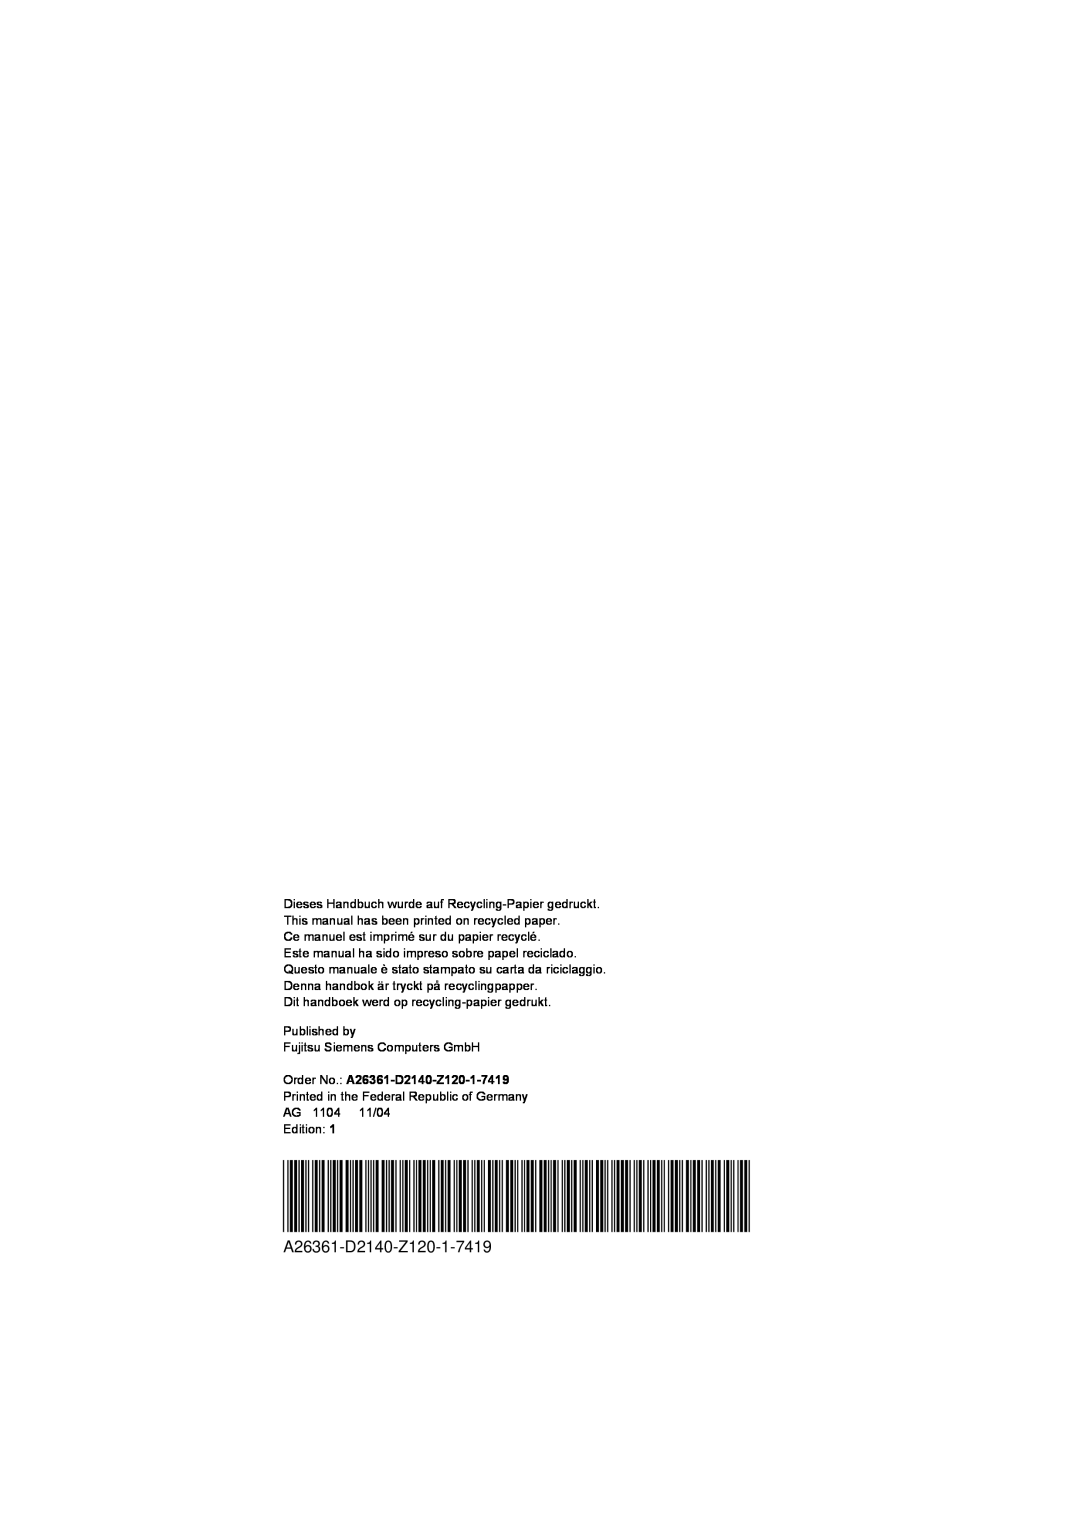 Eclipse - Fujitsu Ten technical manual Order No. A26361-D2140-Z120-1-7419 